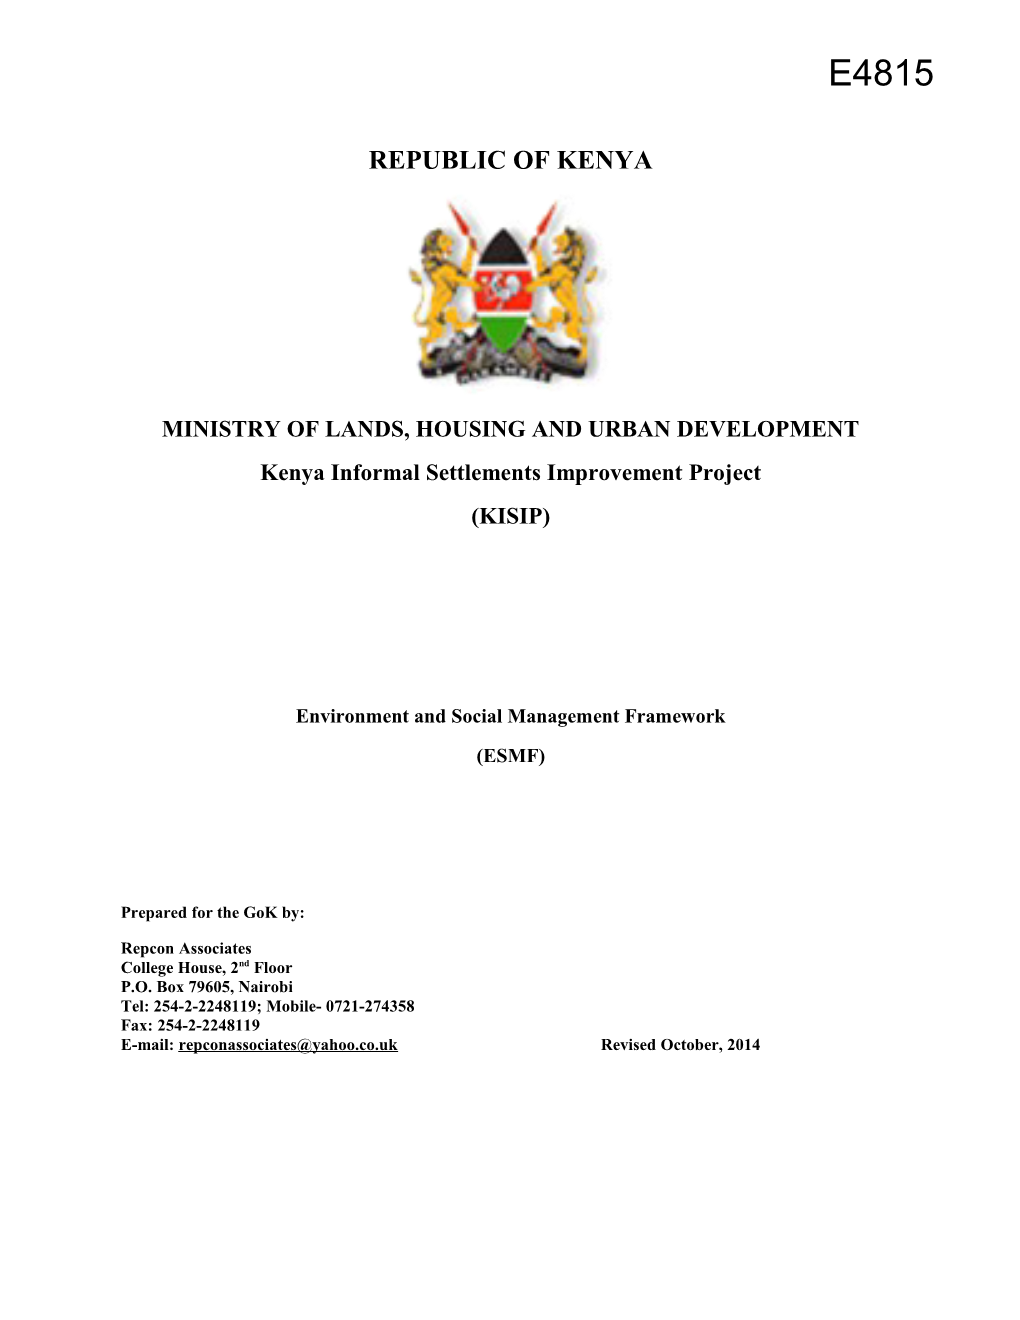 The Kenya Informal Settlements Improvement Programme Environmental and Social Management